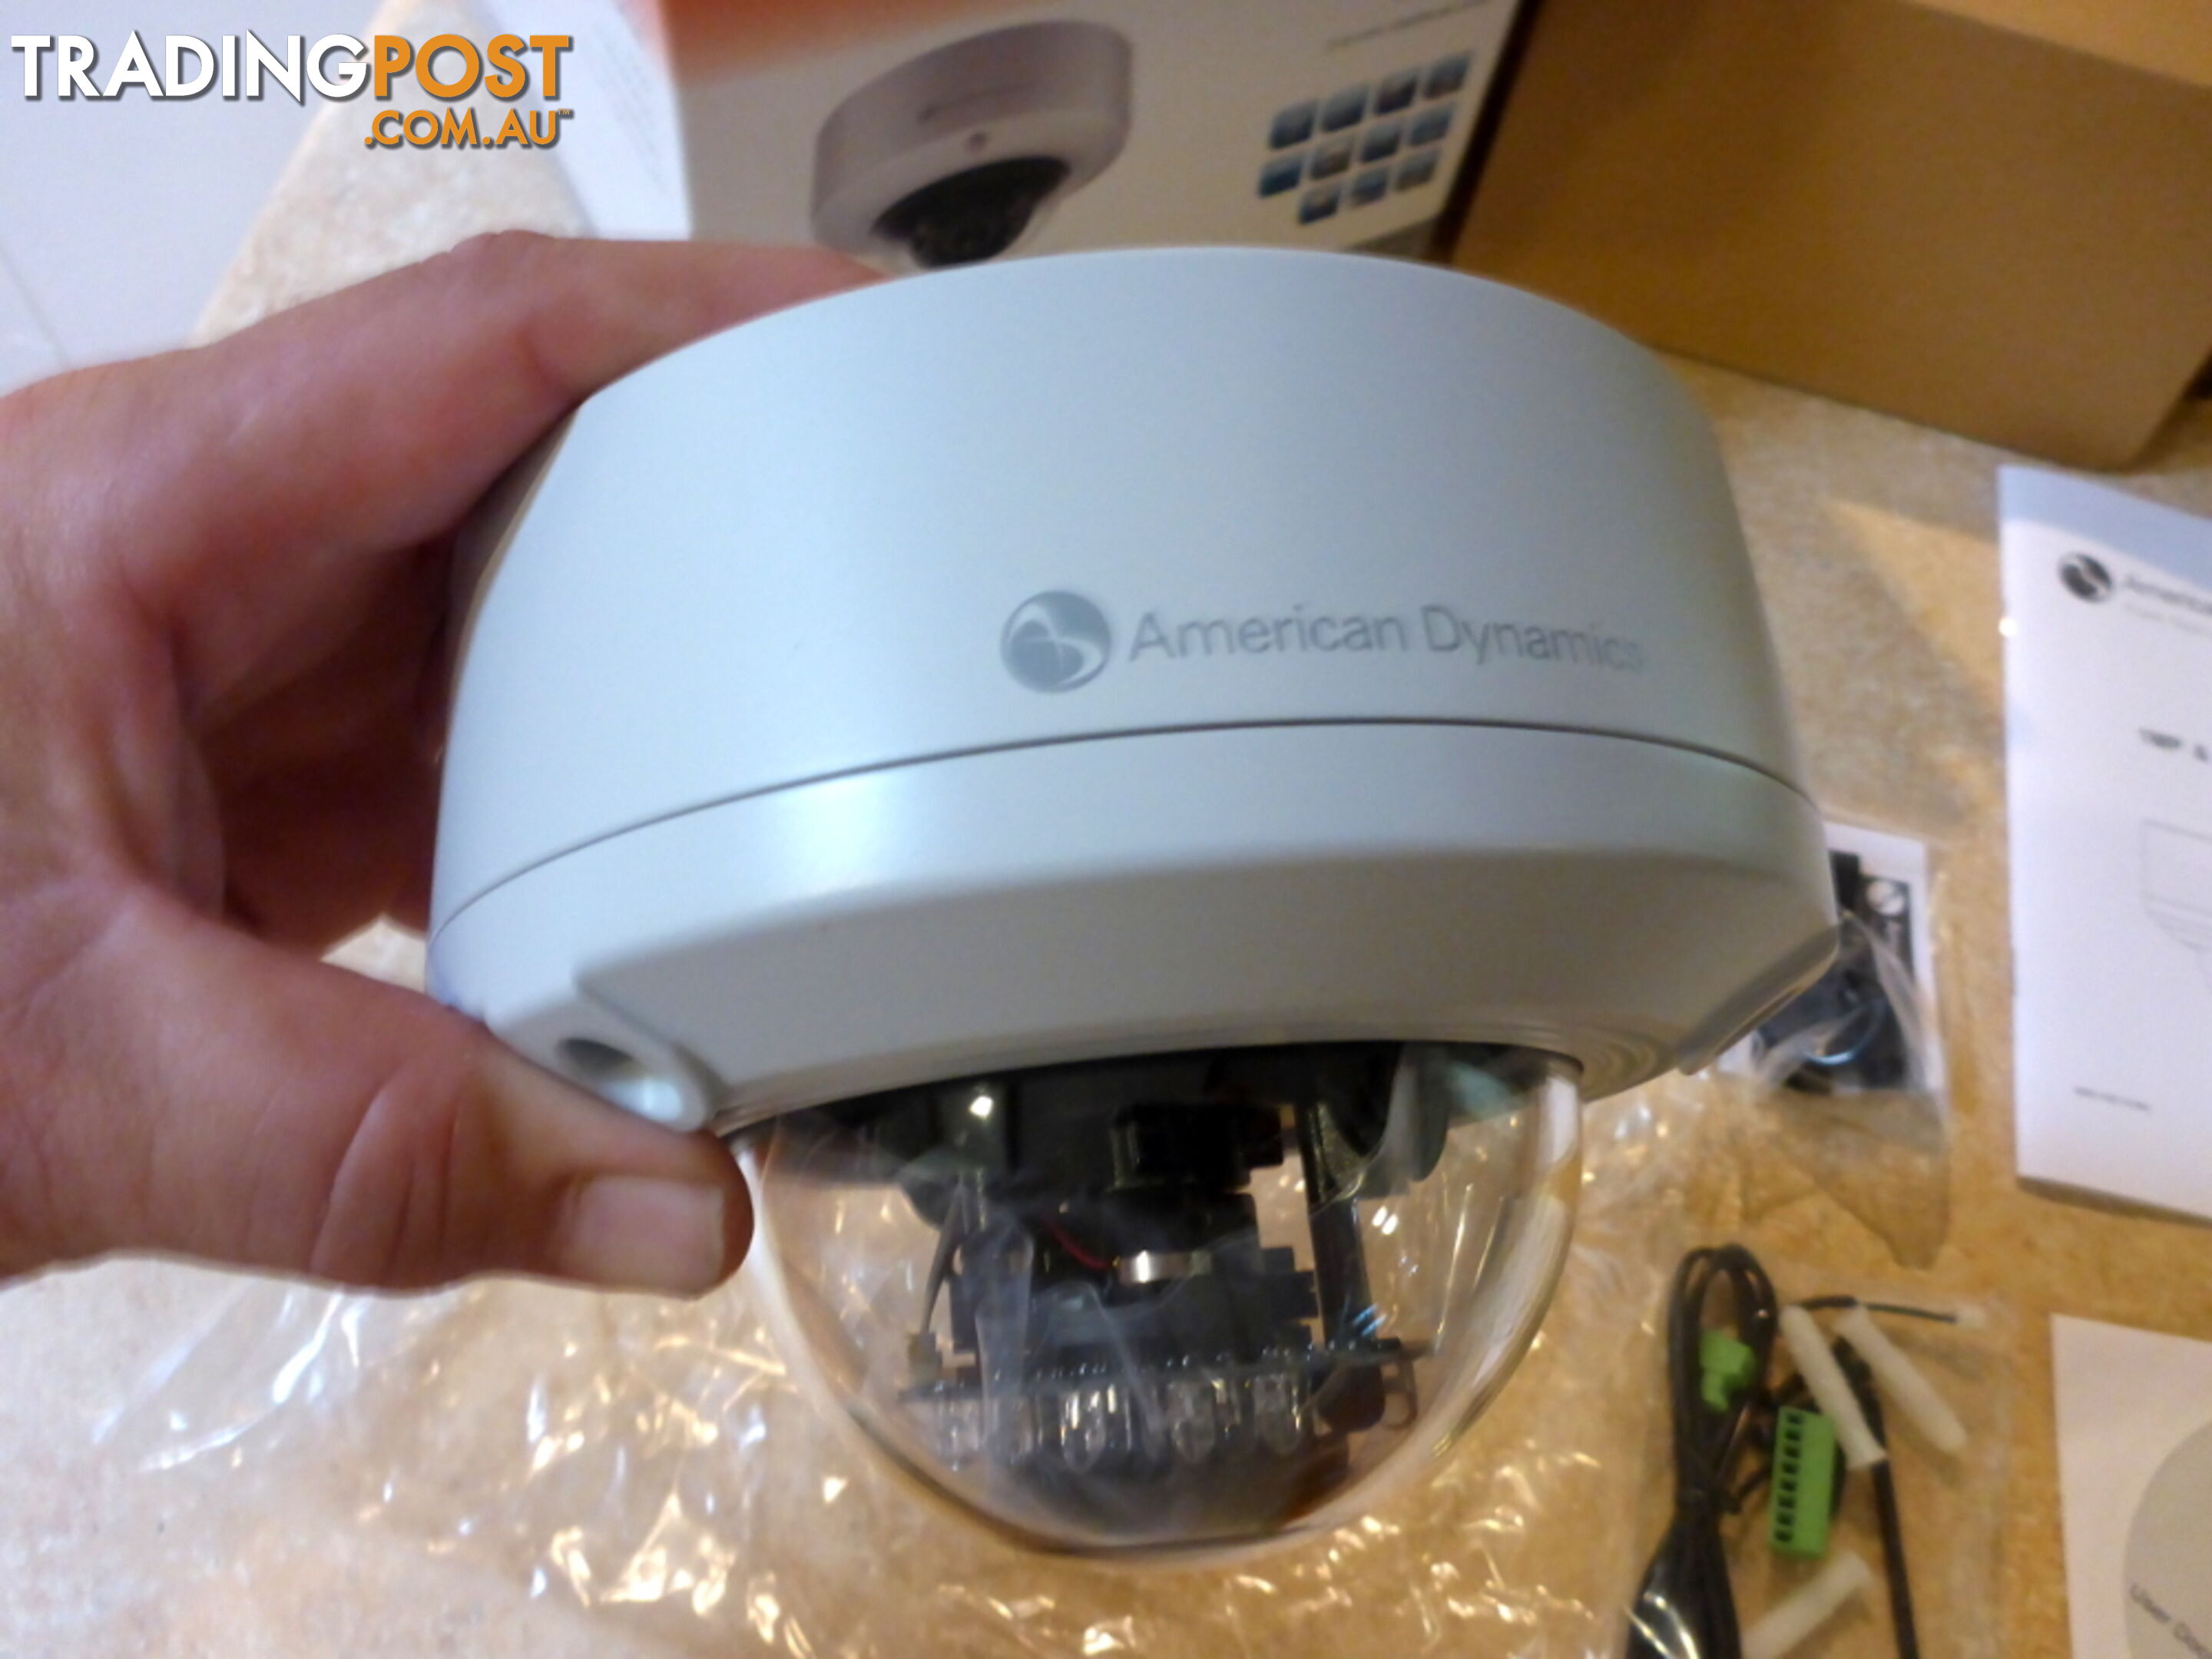 New Tyco / American Dynamics Illustra Flex 600 Mini Dome IP / CCTV Outdoor Security Camera